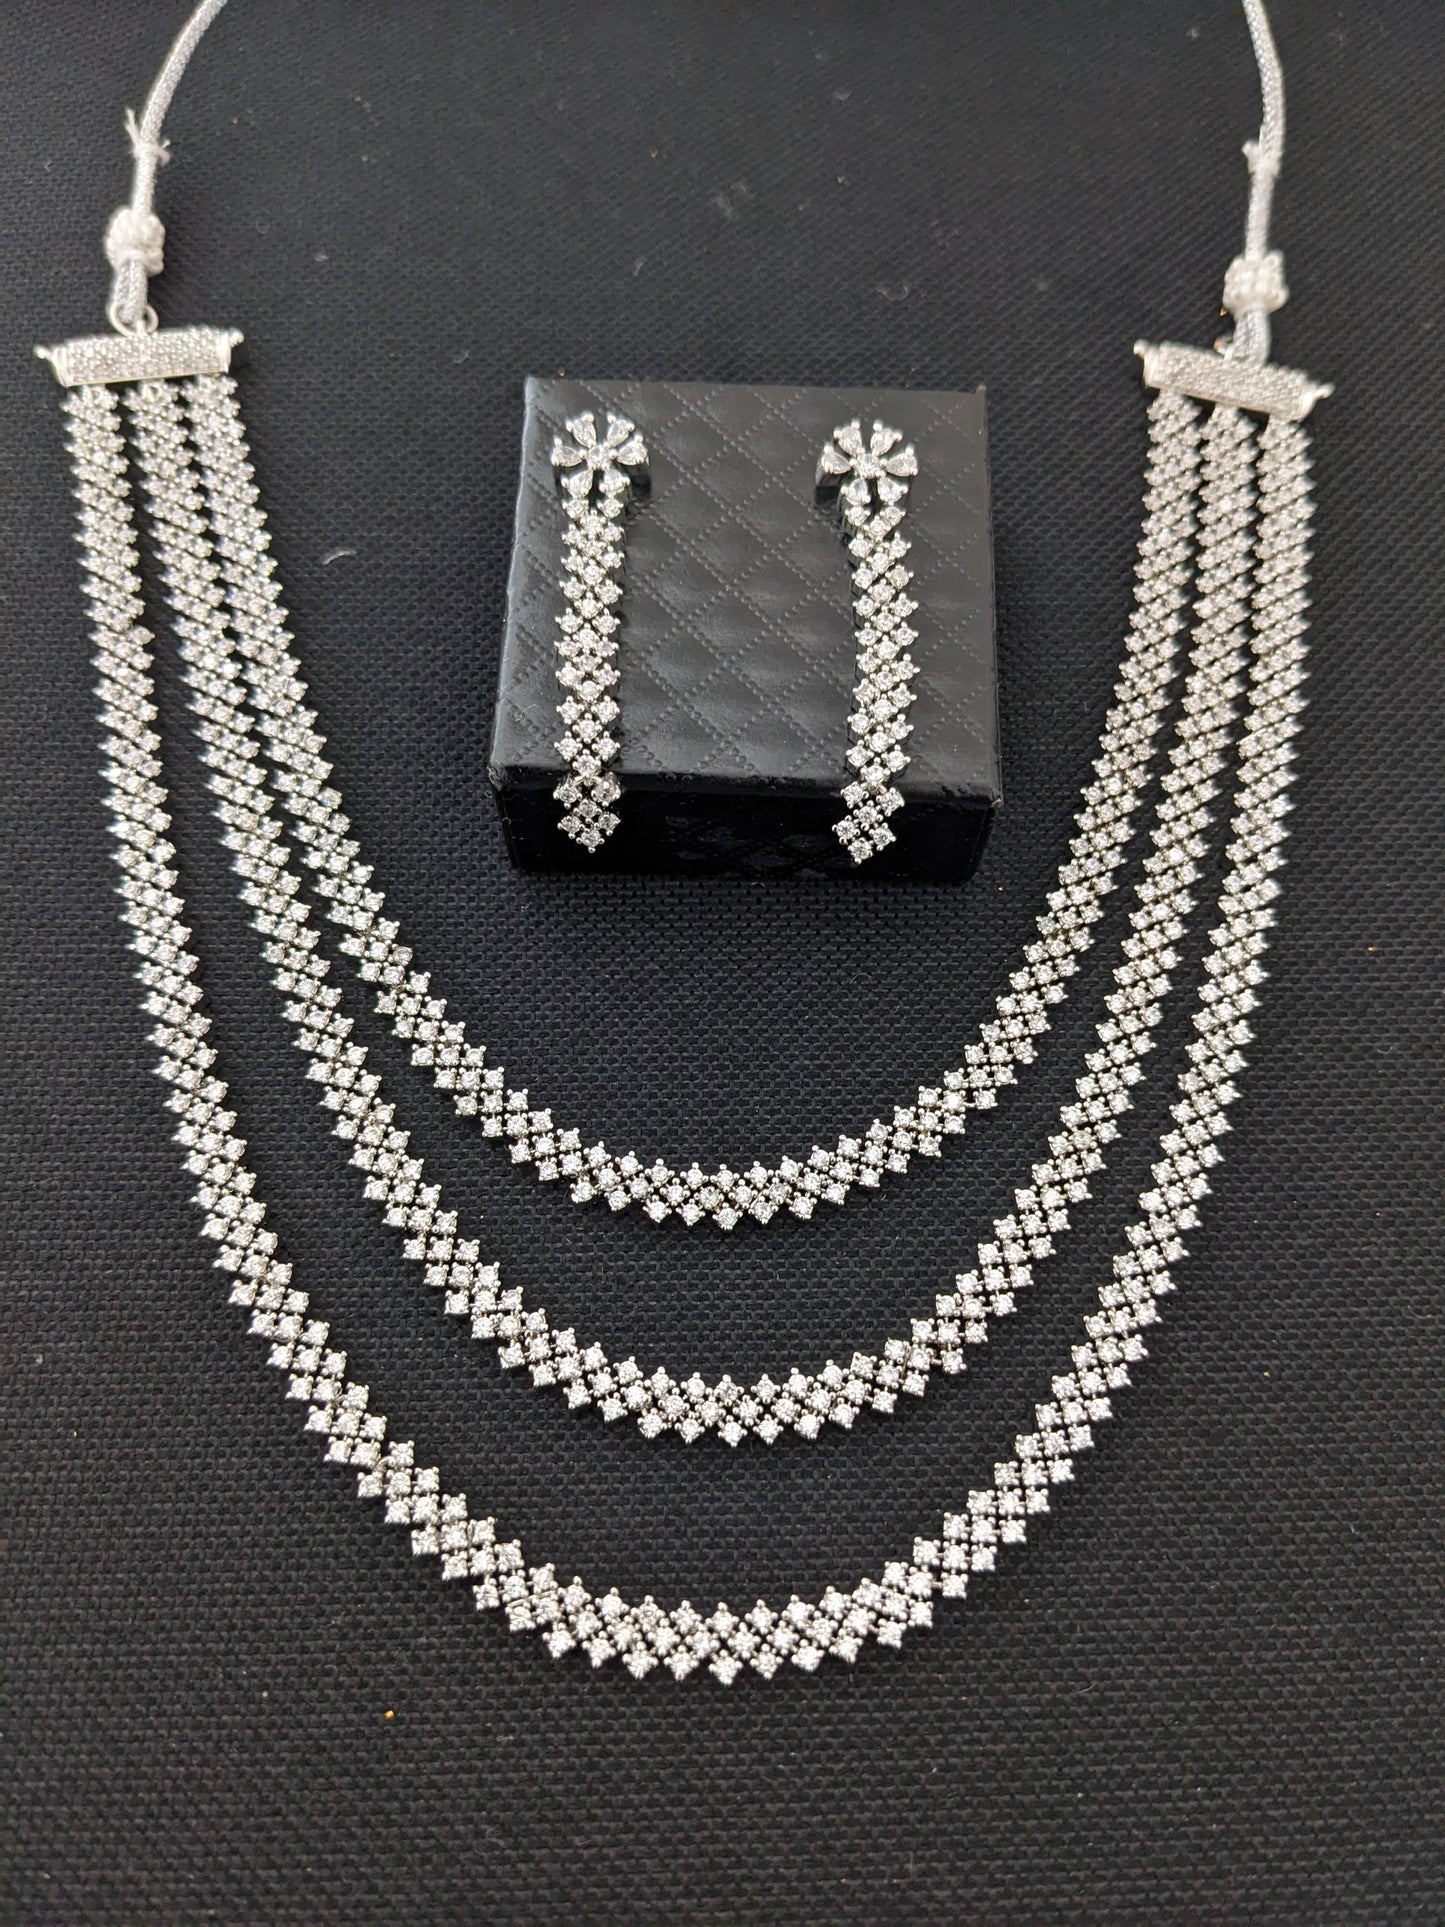 Triple strand diamond look alike Necklace and Earrings set